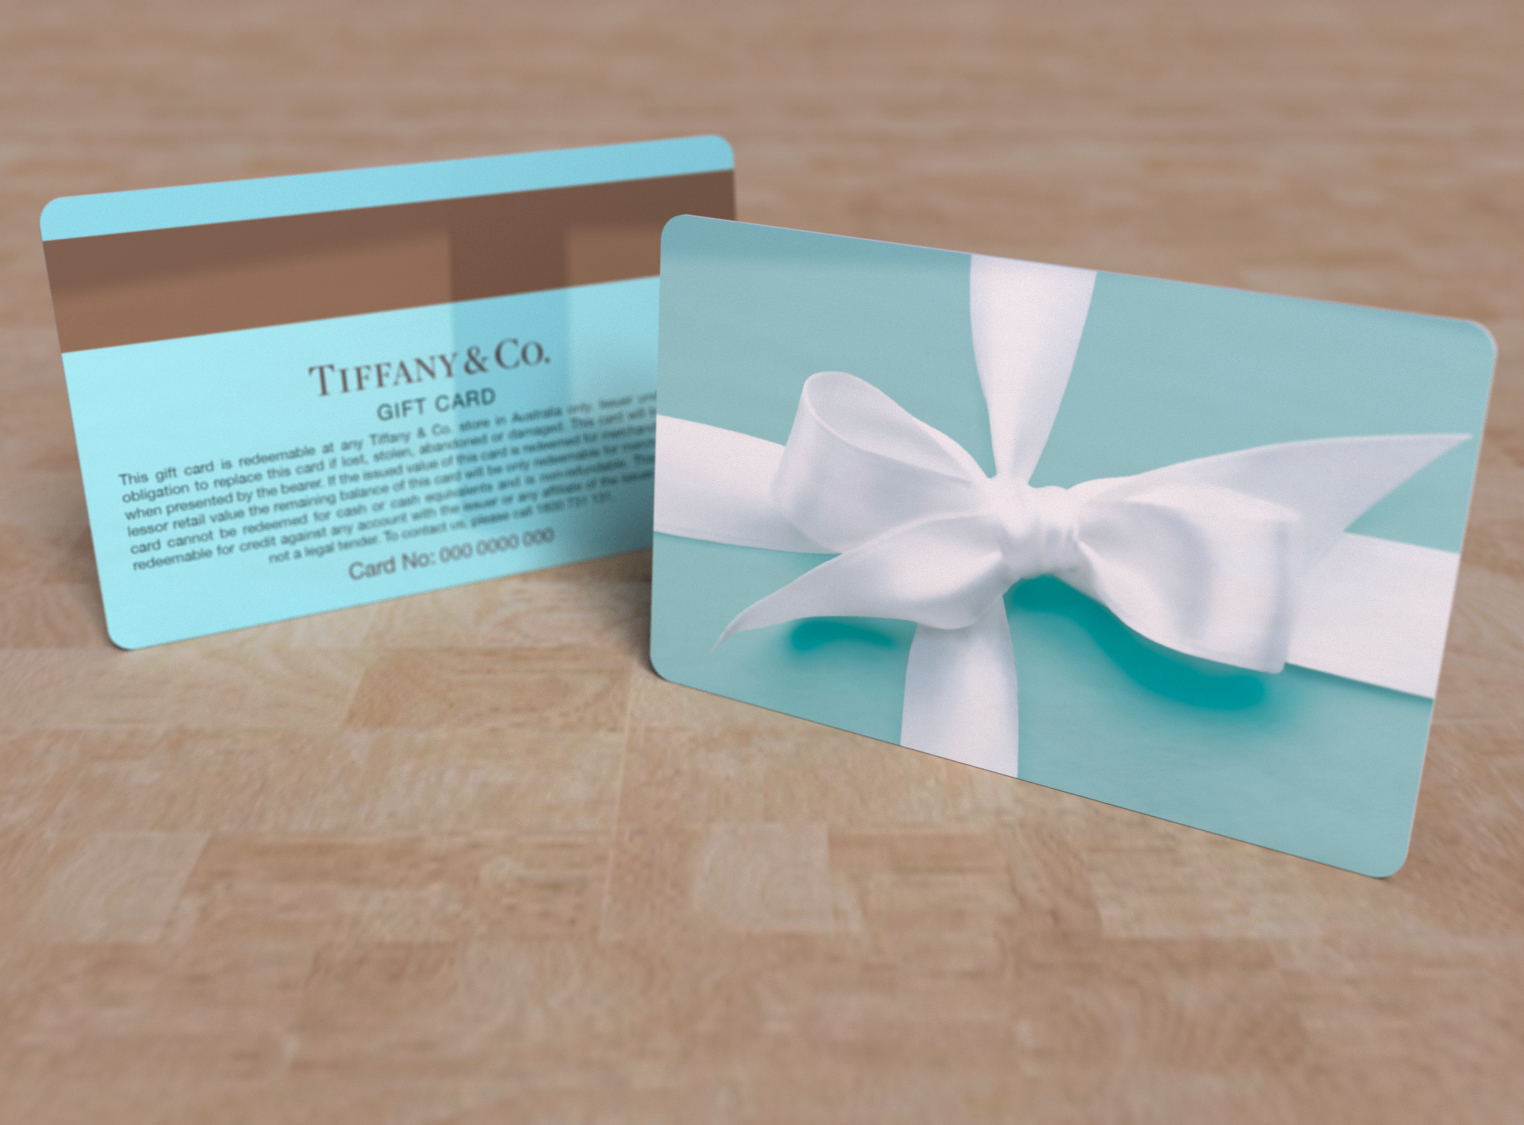 Tiffany & Co. » Gift Card – Express Card